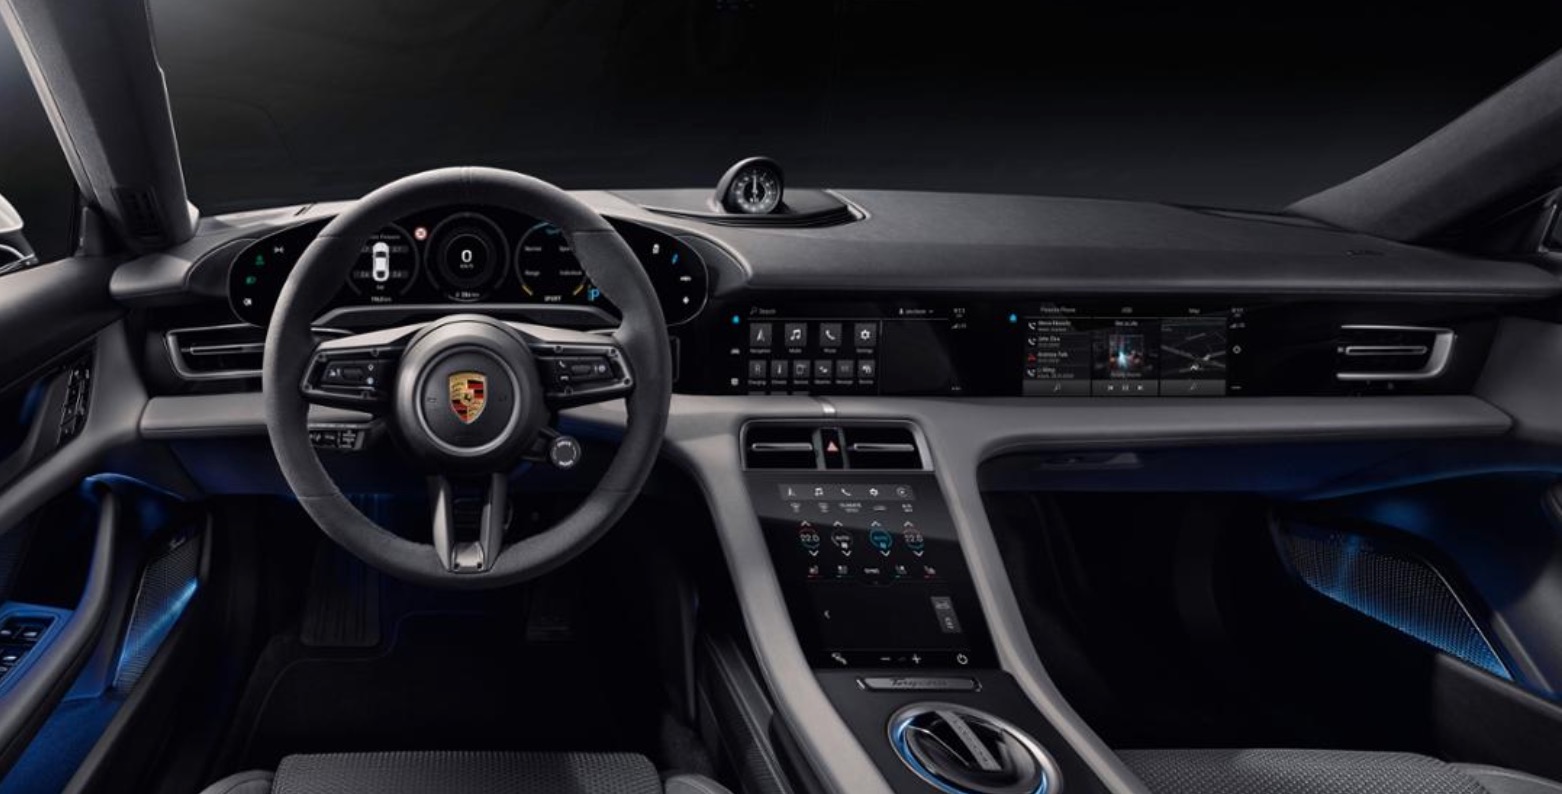 Porsche unveils the interior of Taycan electric car - Electrek